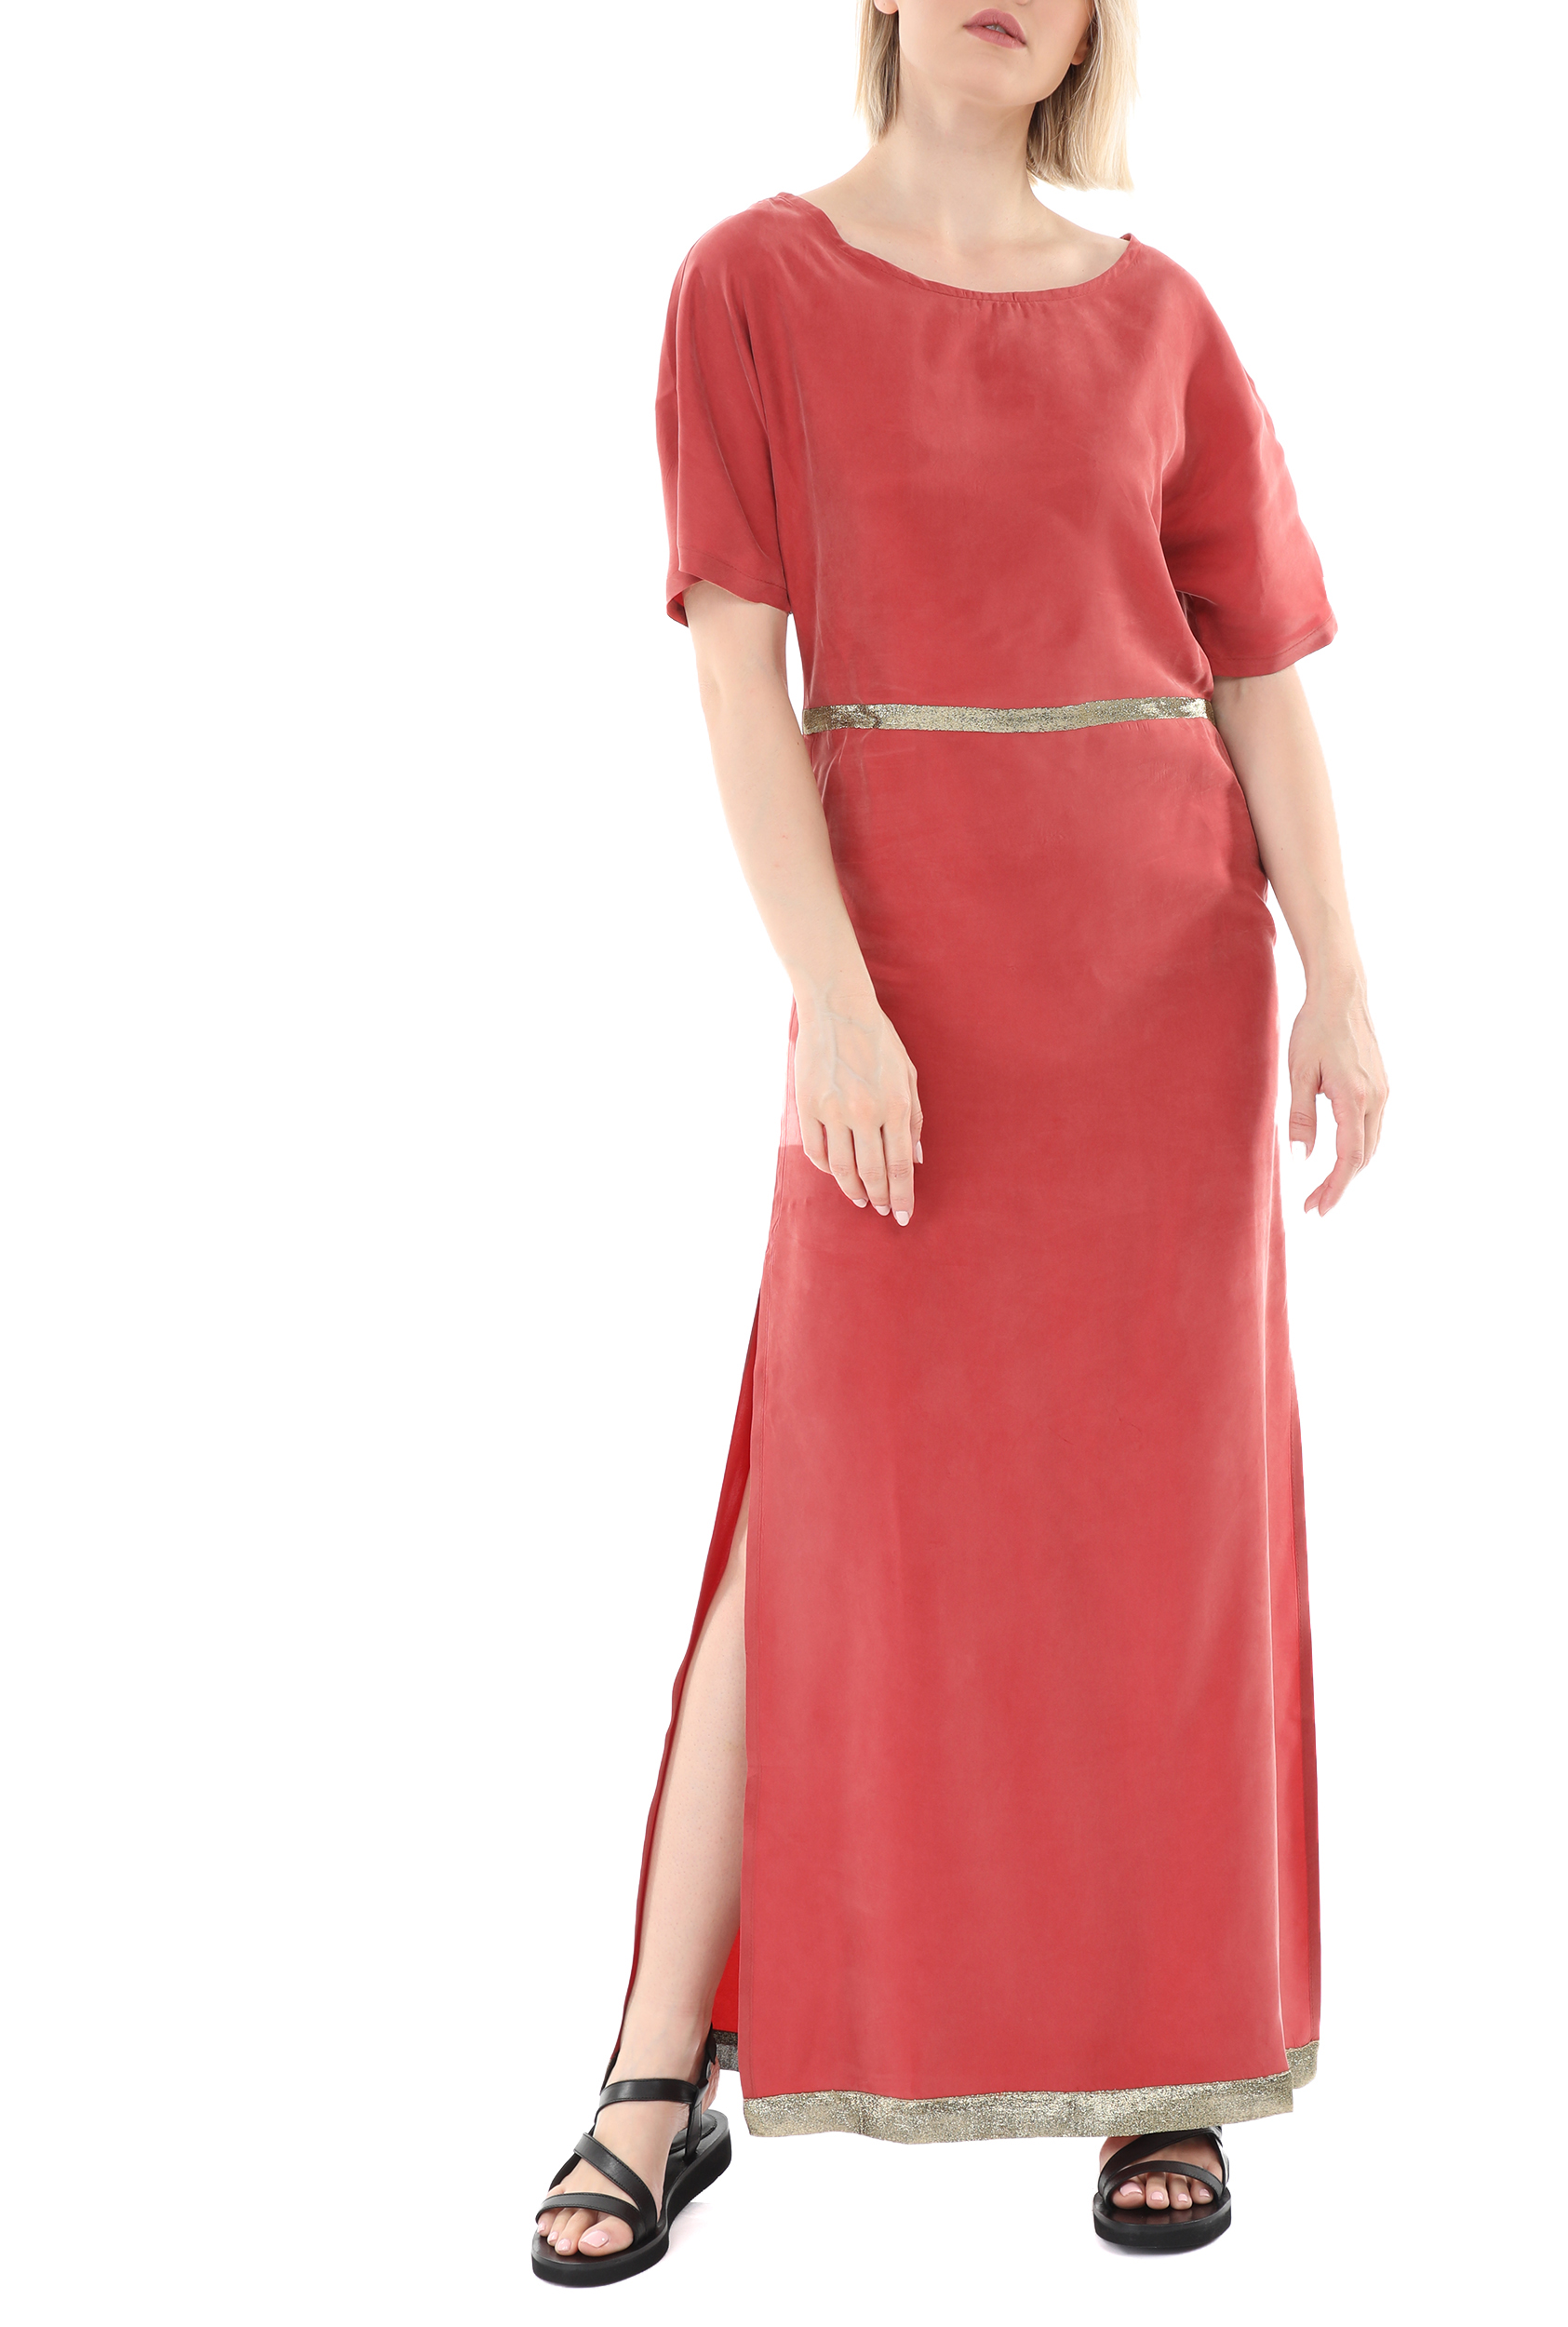 GLAMAZONS – Γυναικείο μακρύ φόρεμα GLAMAZONS TINOS κόκκινο χρυσό